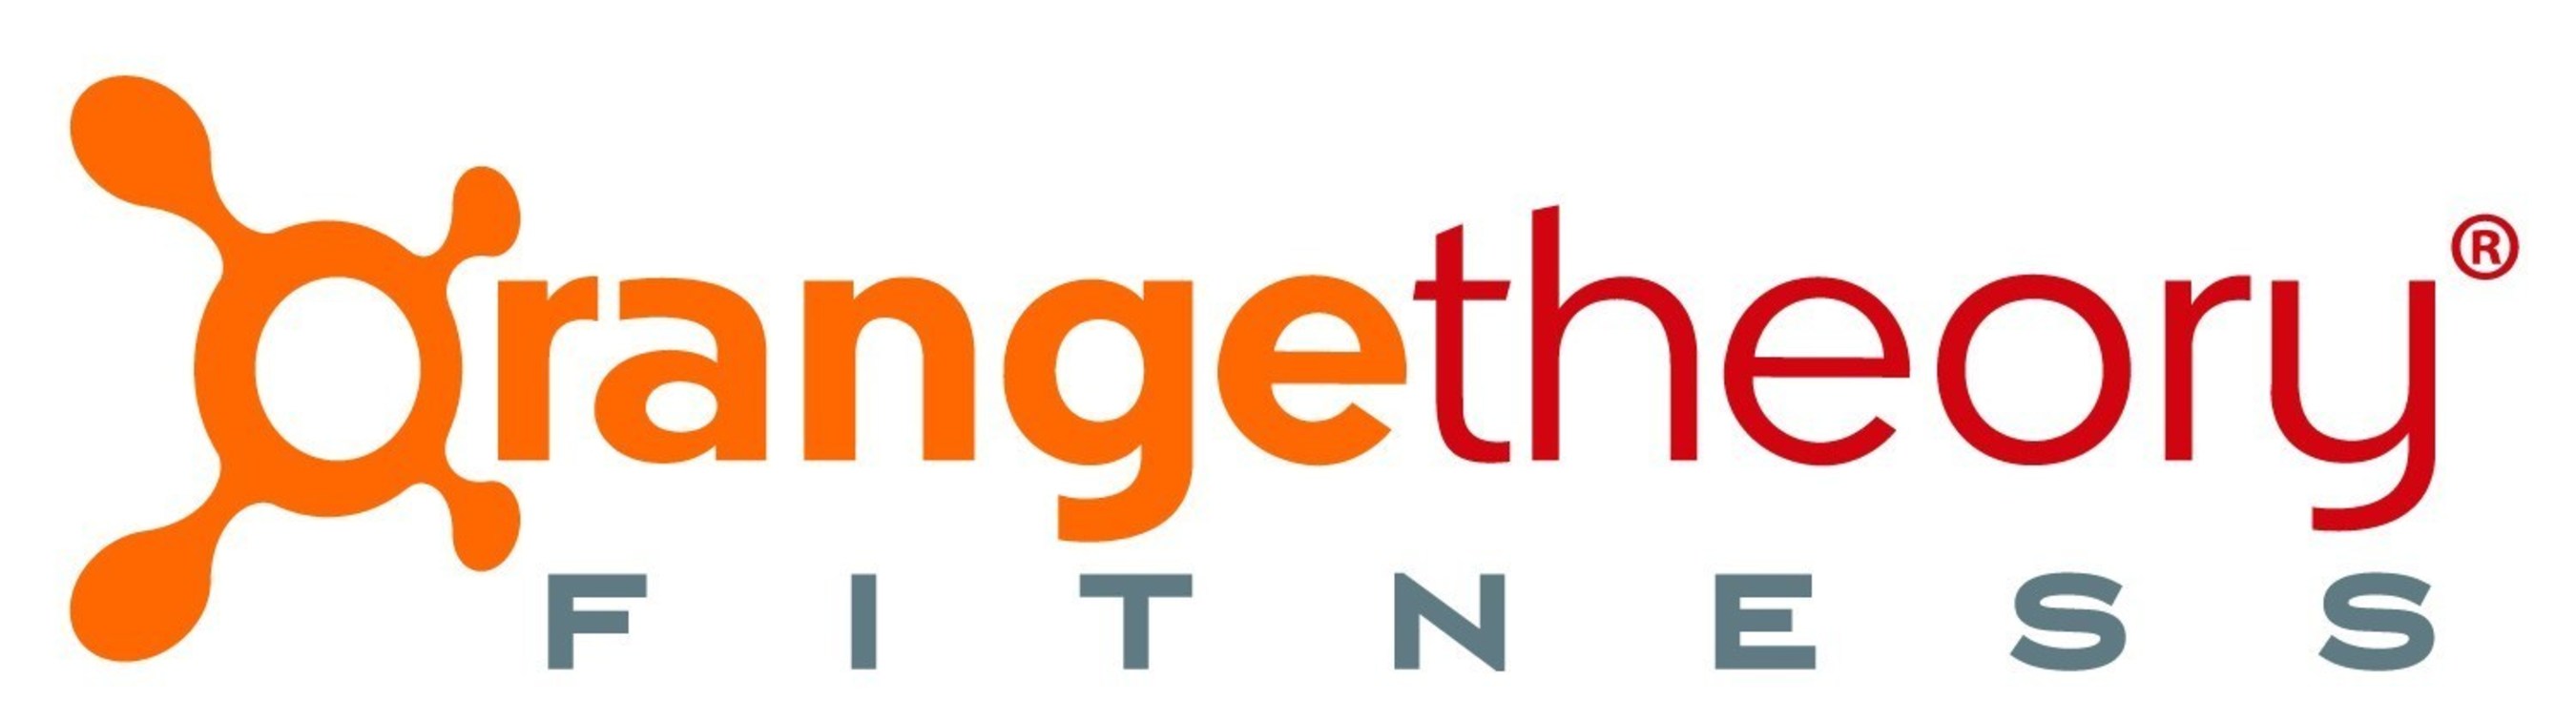 Orangetheory Fitness - Logo